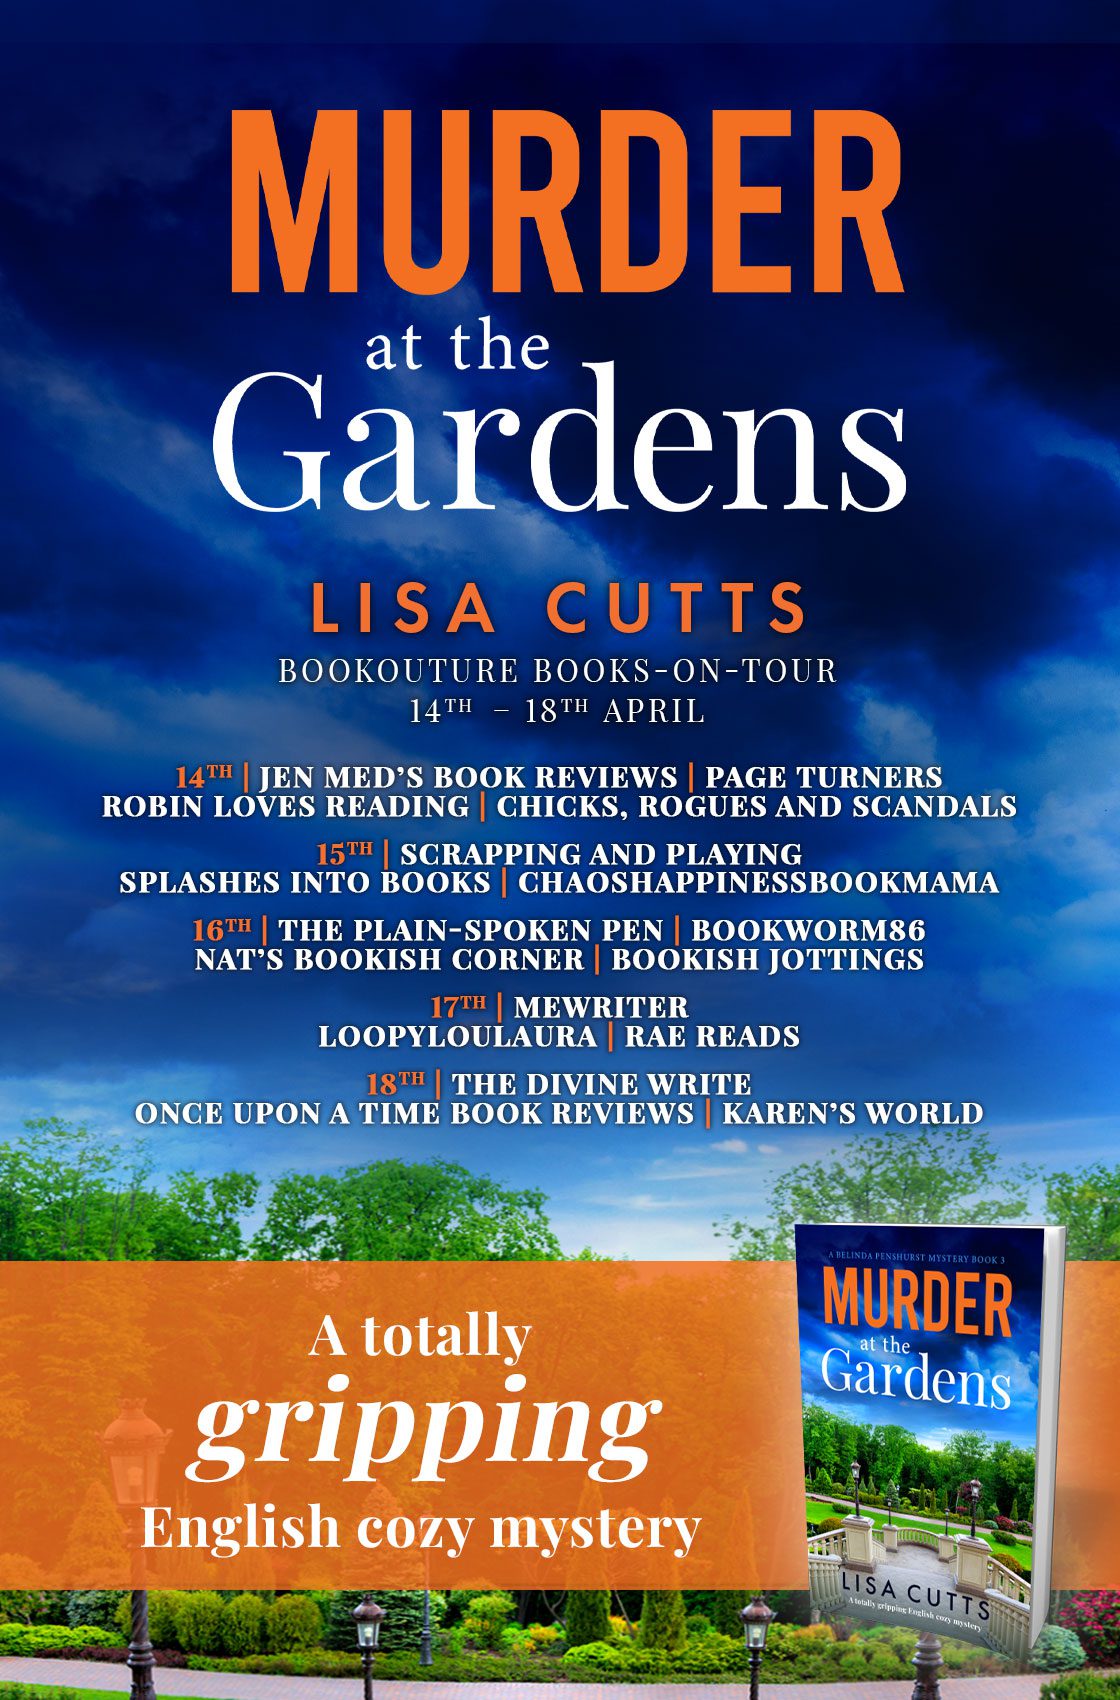 Murder at the Gardens blog tour banner